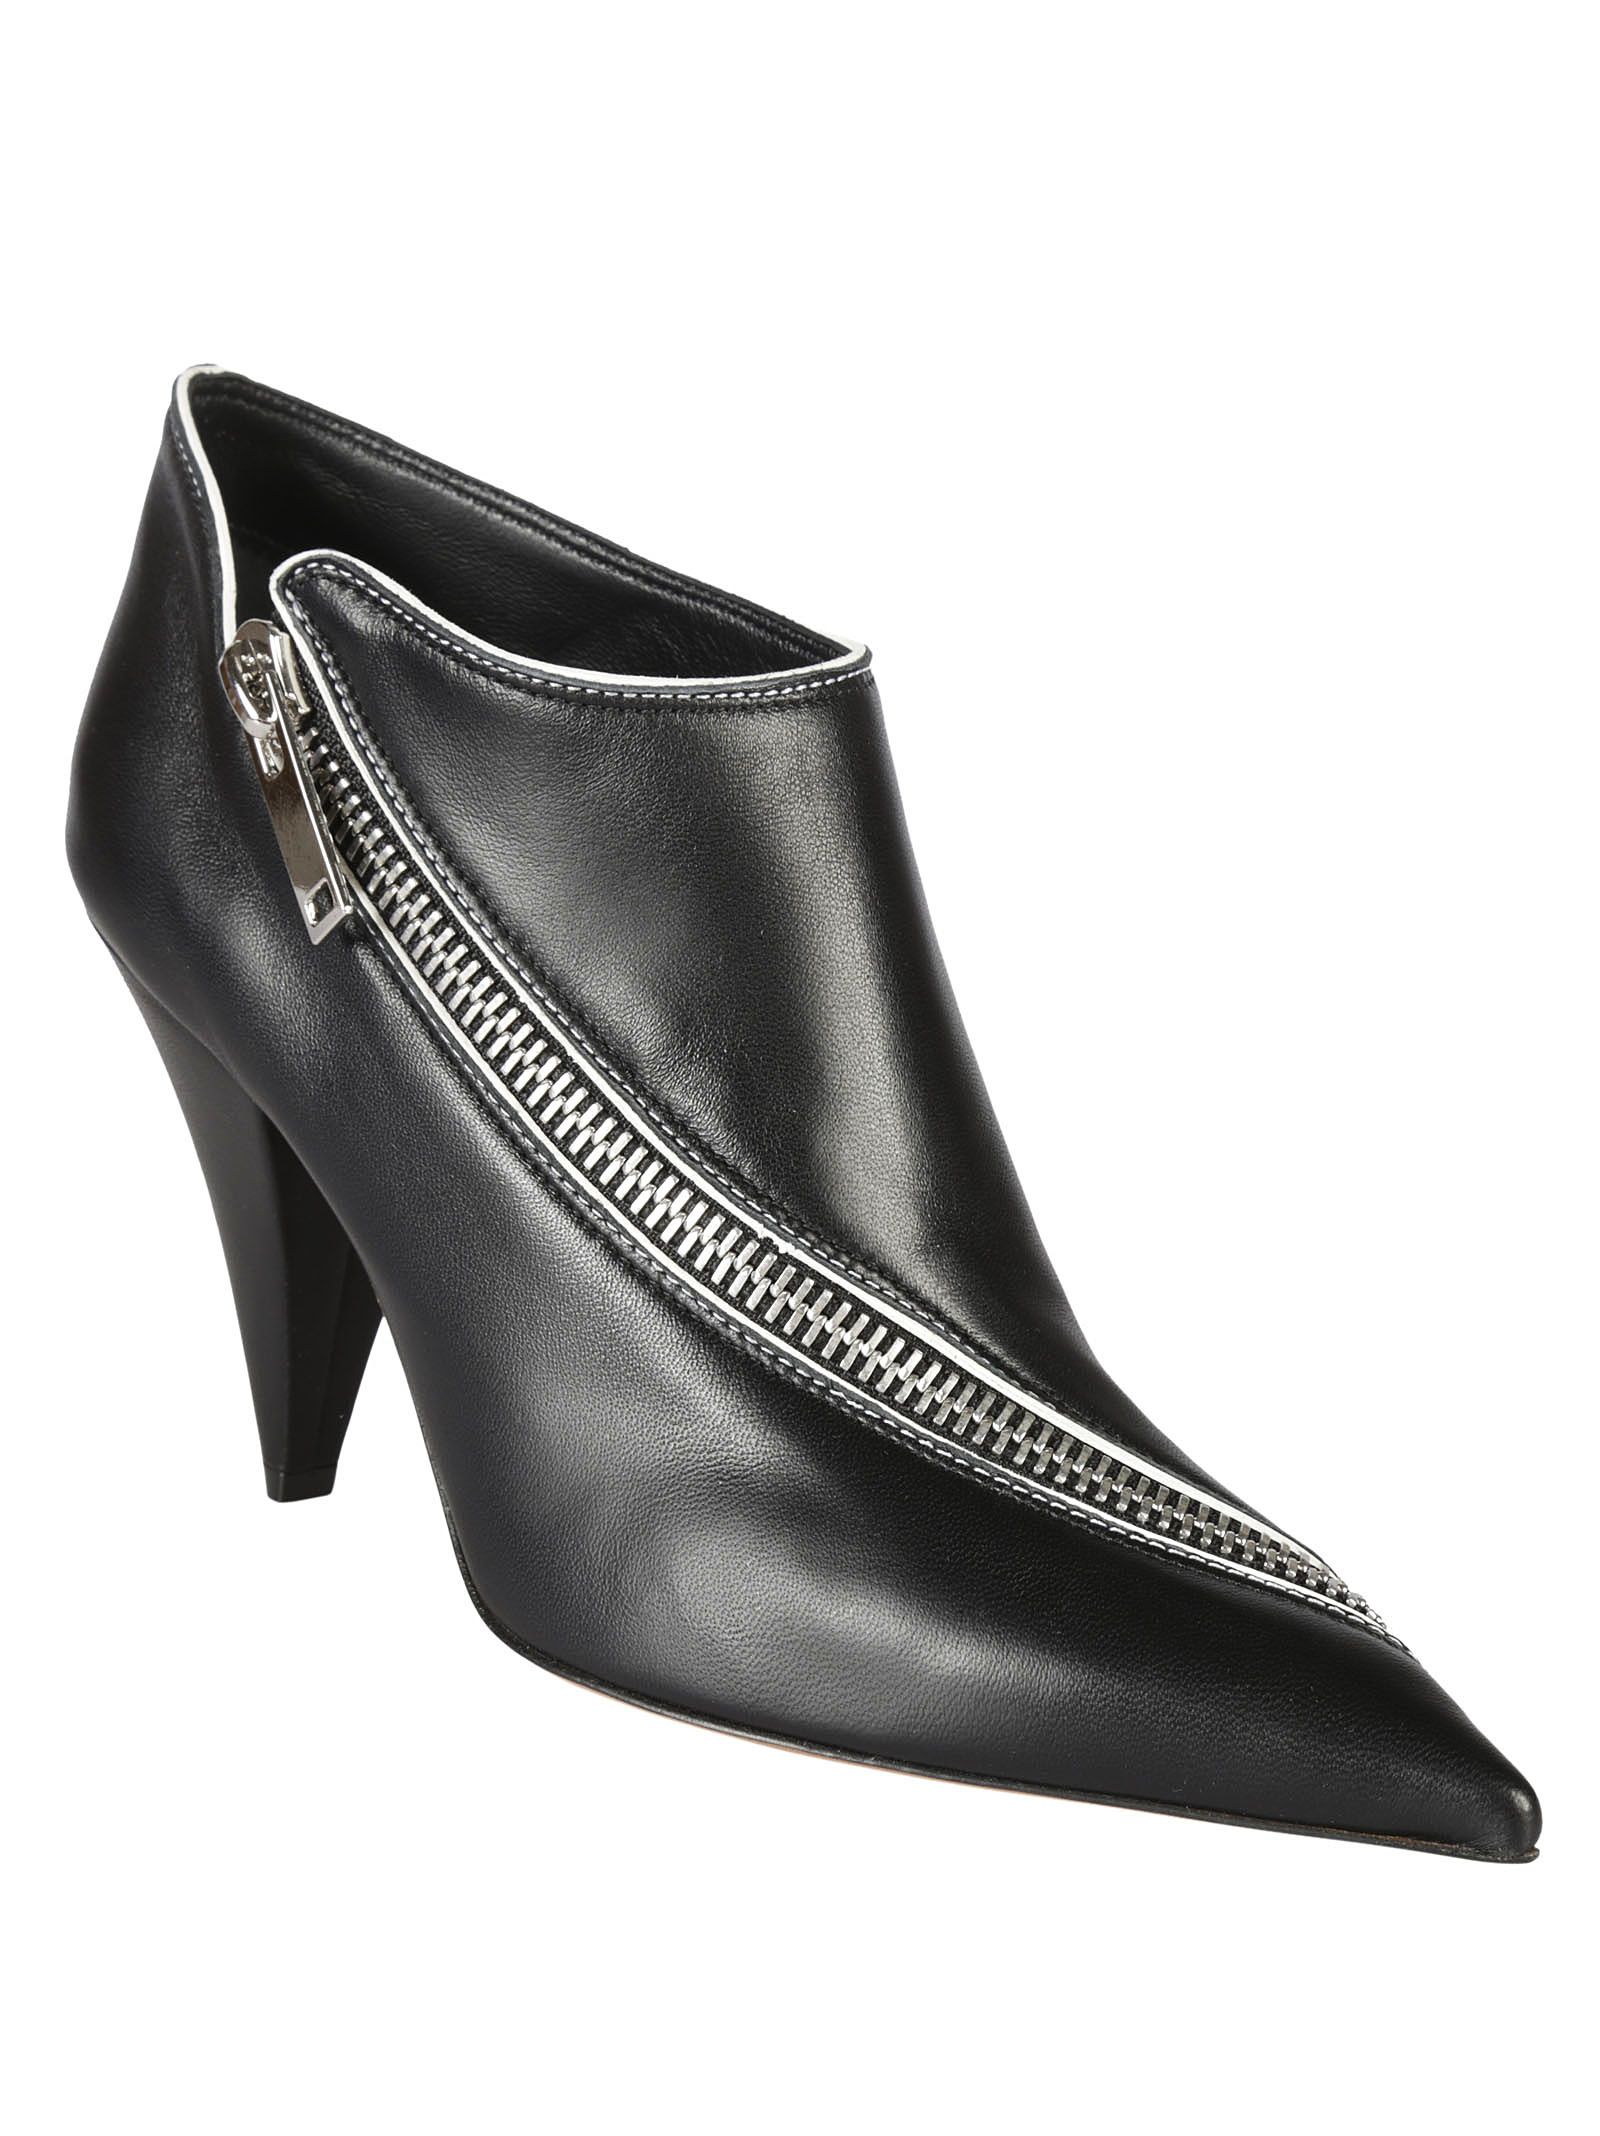 Celine - Celine Zipped Ankle Boots - Nero, Women's Boots | Italist